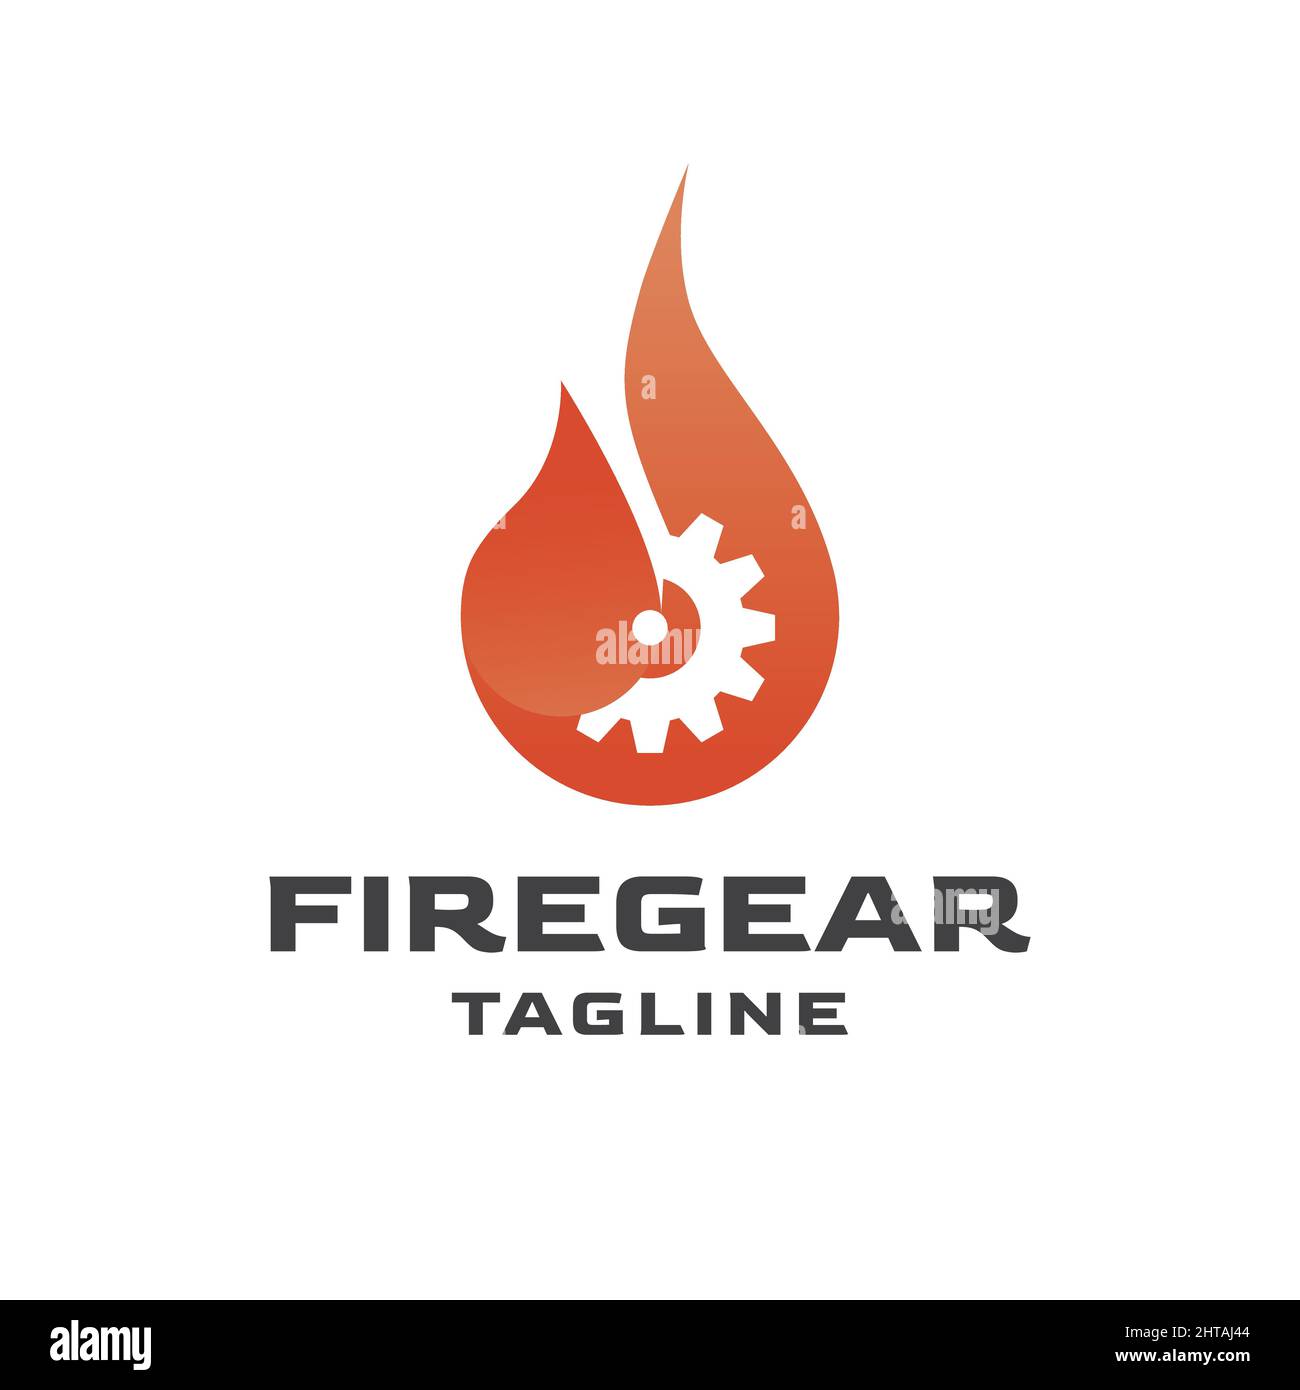 Gear fire logo design inspiration vector template Stock Vector